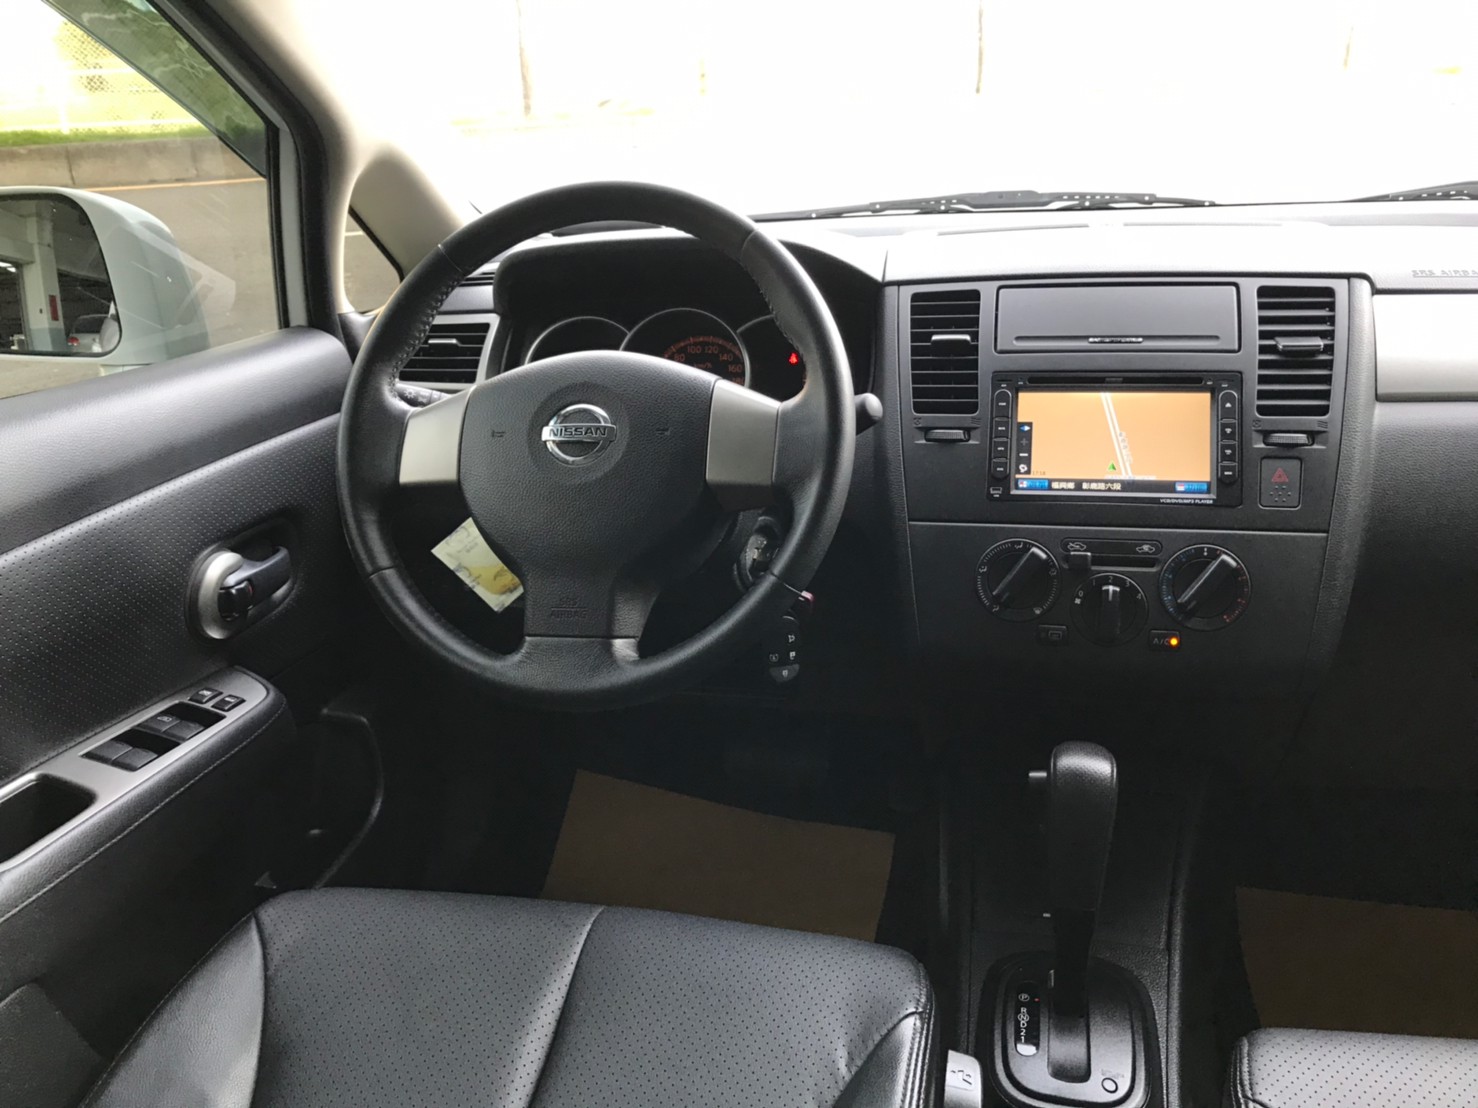 2017TIIDA 4D 里程保證 認證車 白色黑內裝 代步上課通勤好停車 SUM29.8 1.6c_210615_8